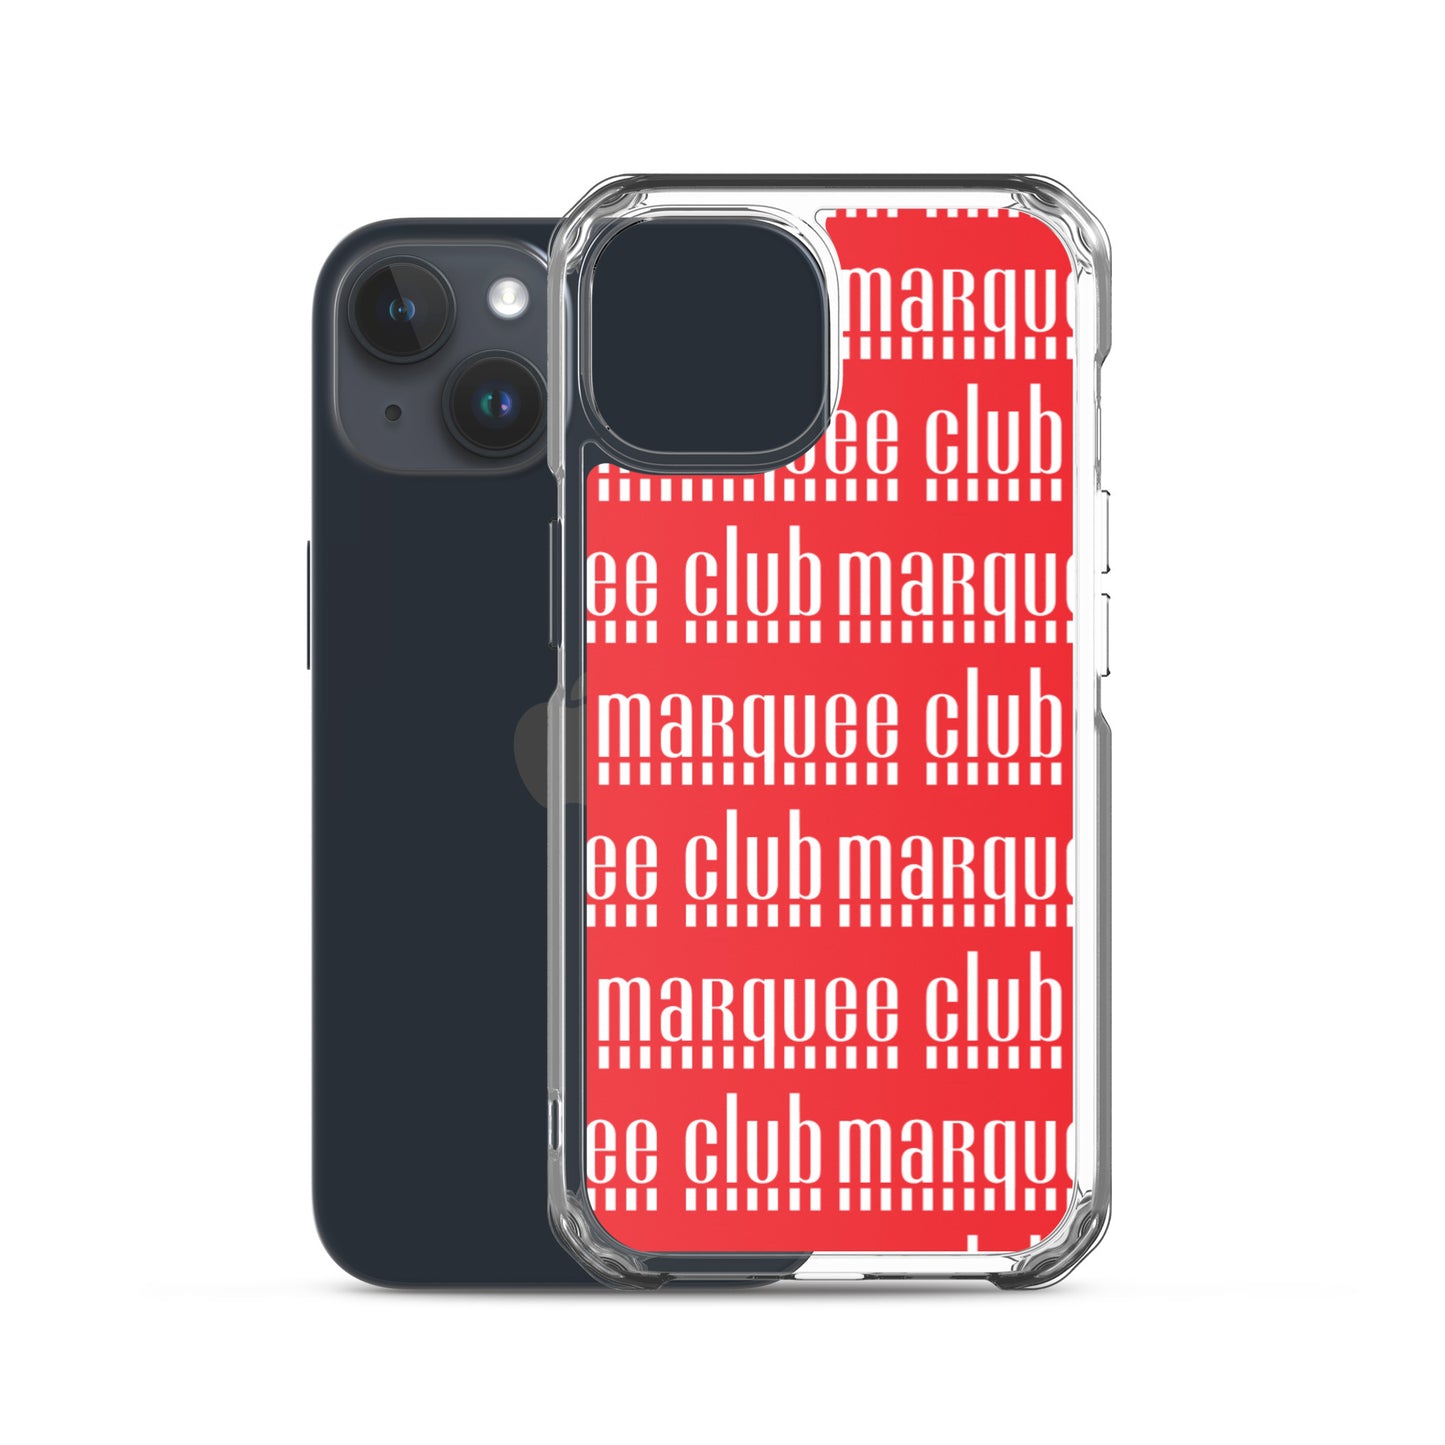 Marquee Club iPhone Case